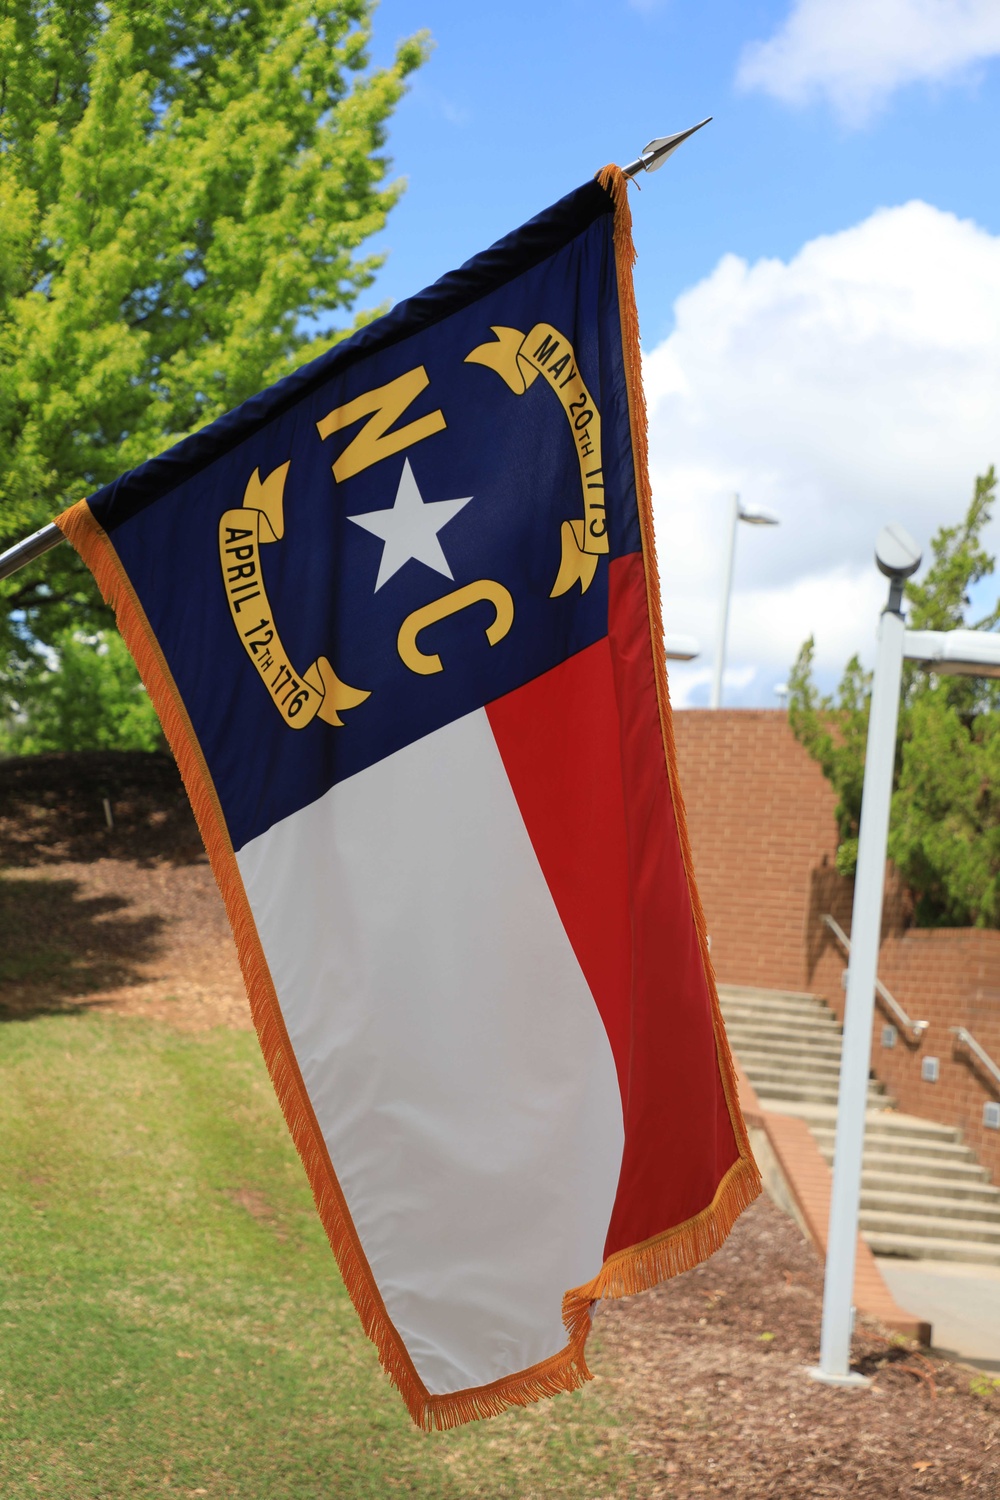 North Carolina's State Partner Flags